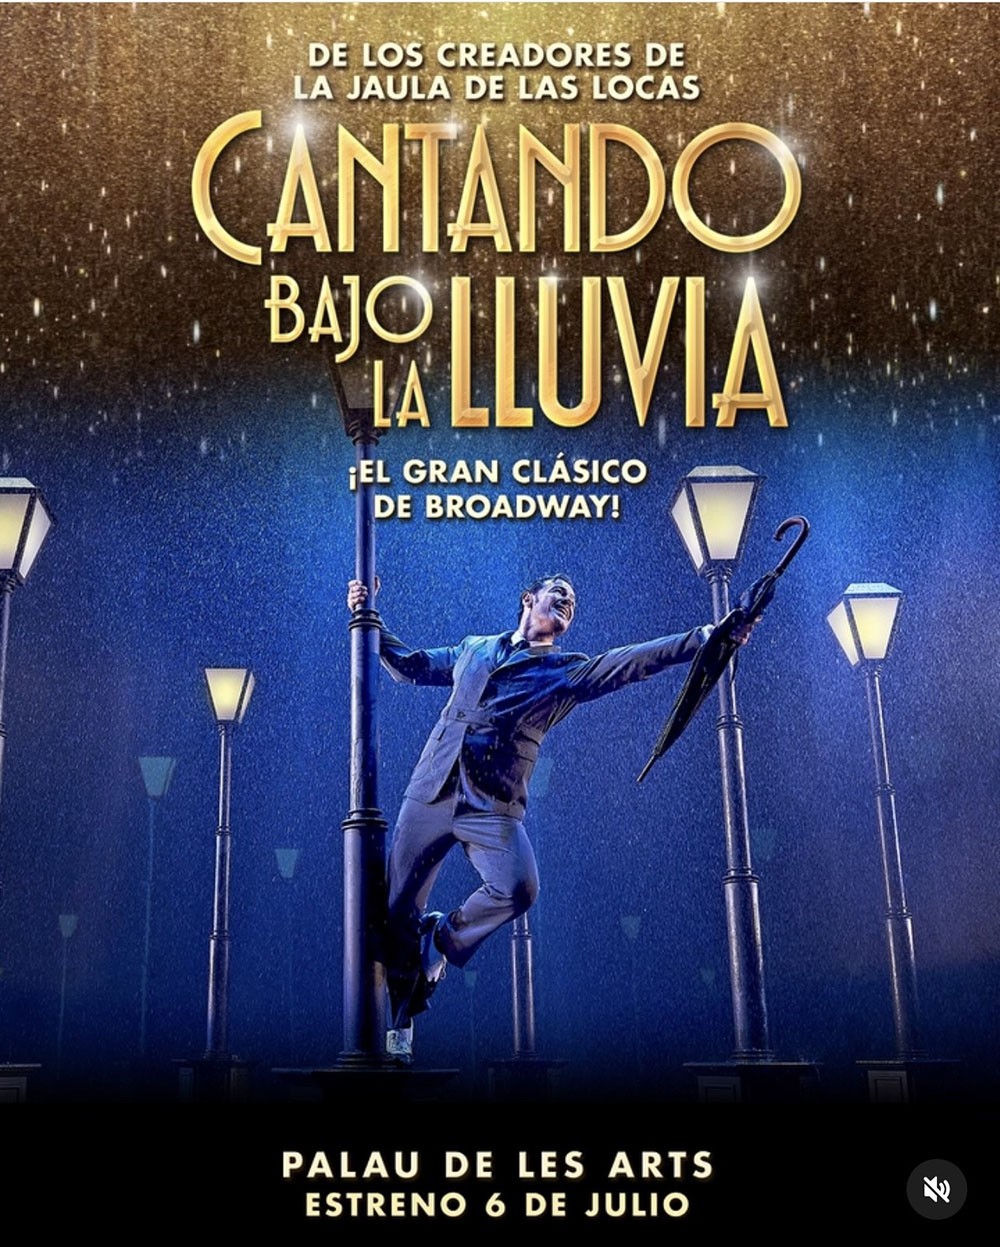 El musical “CANTANDO BAJO LA LLUVIA” llega a Valencia